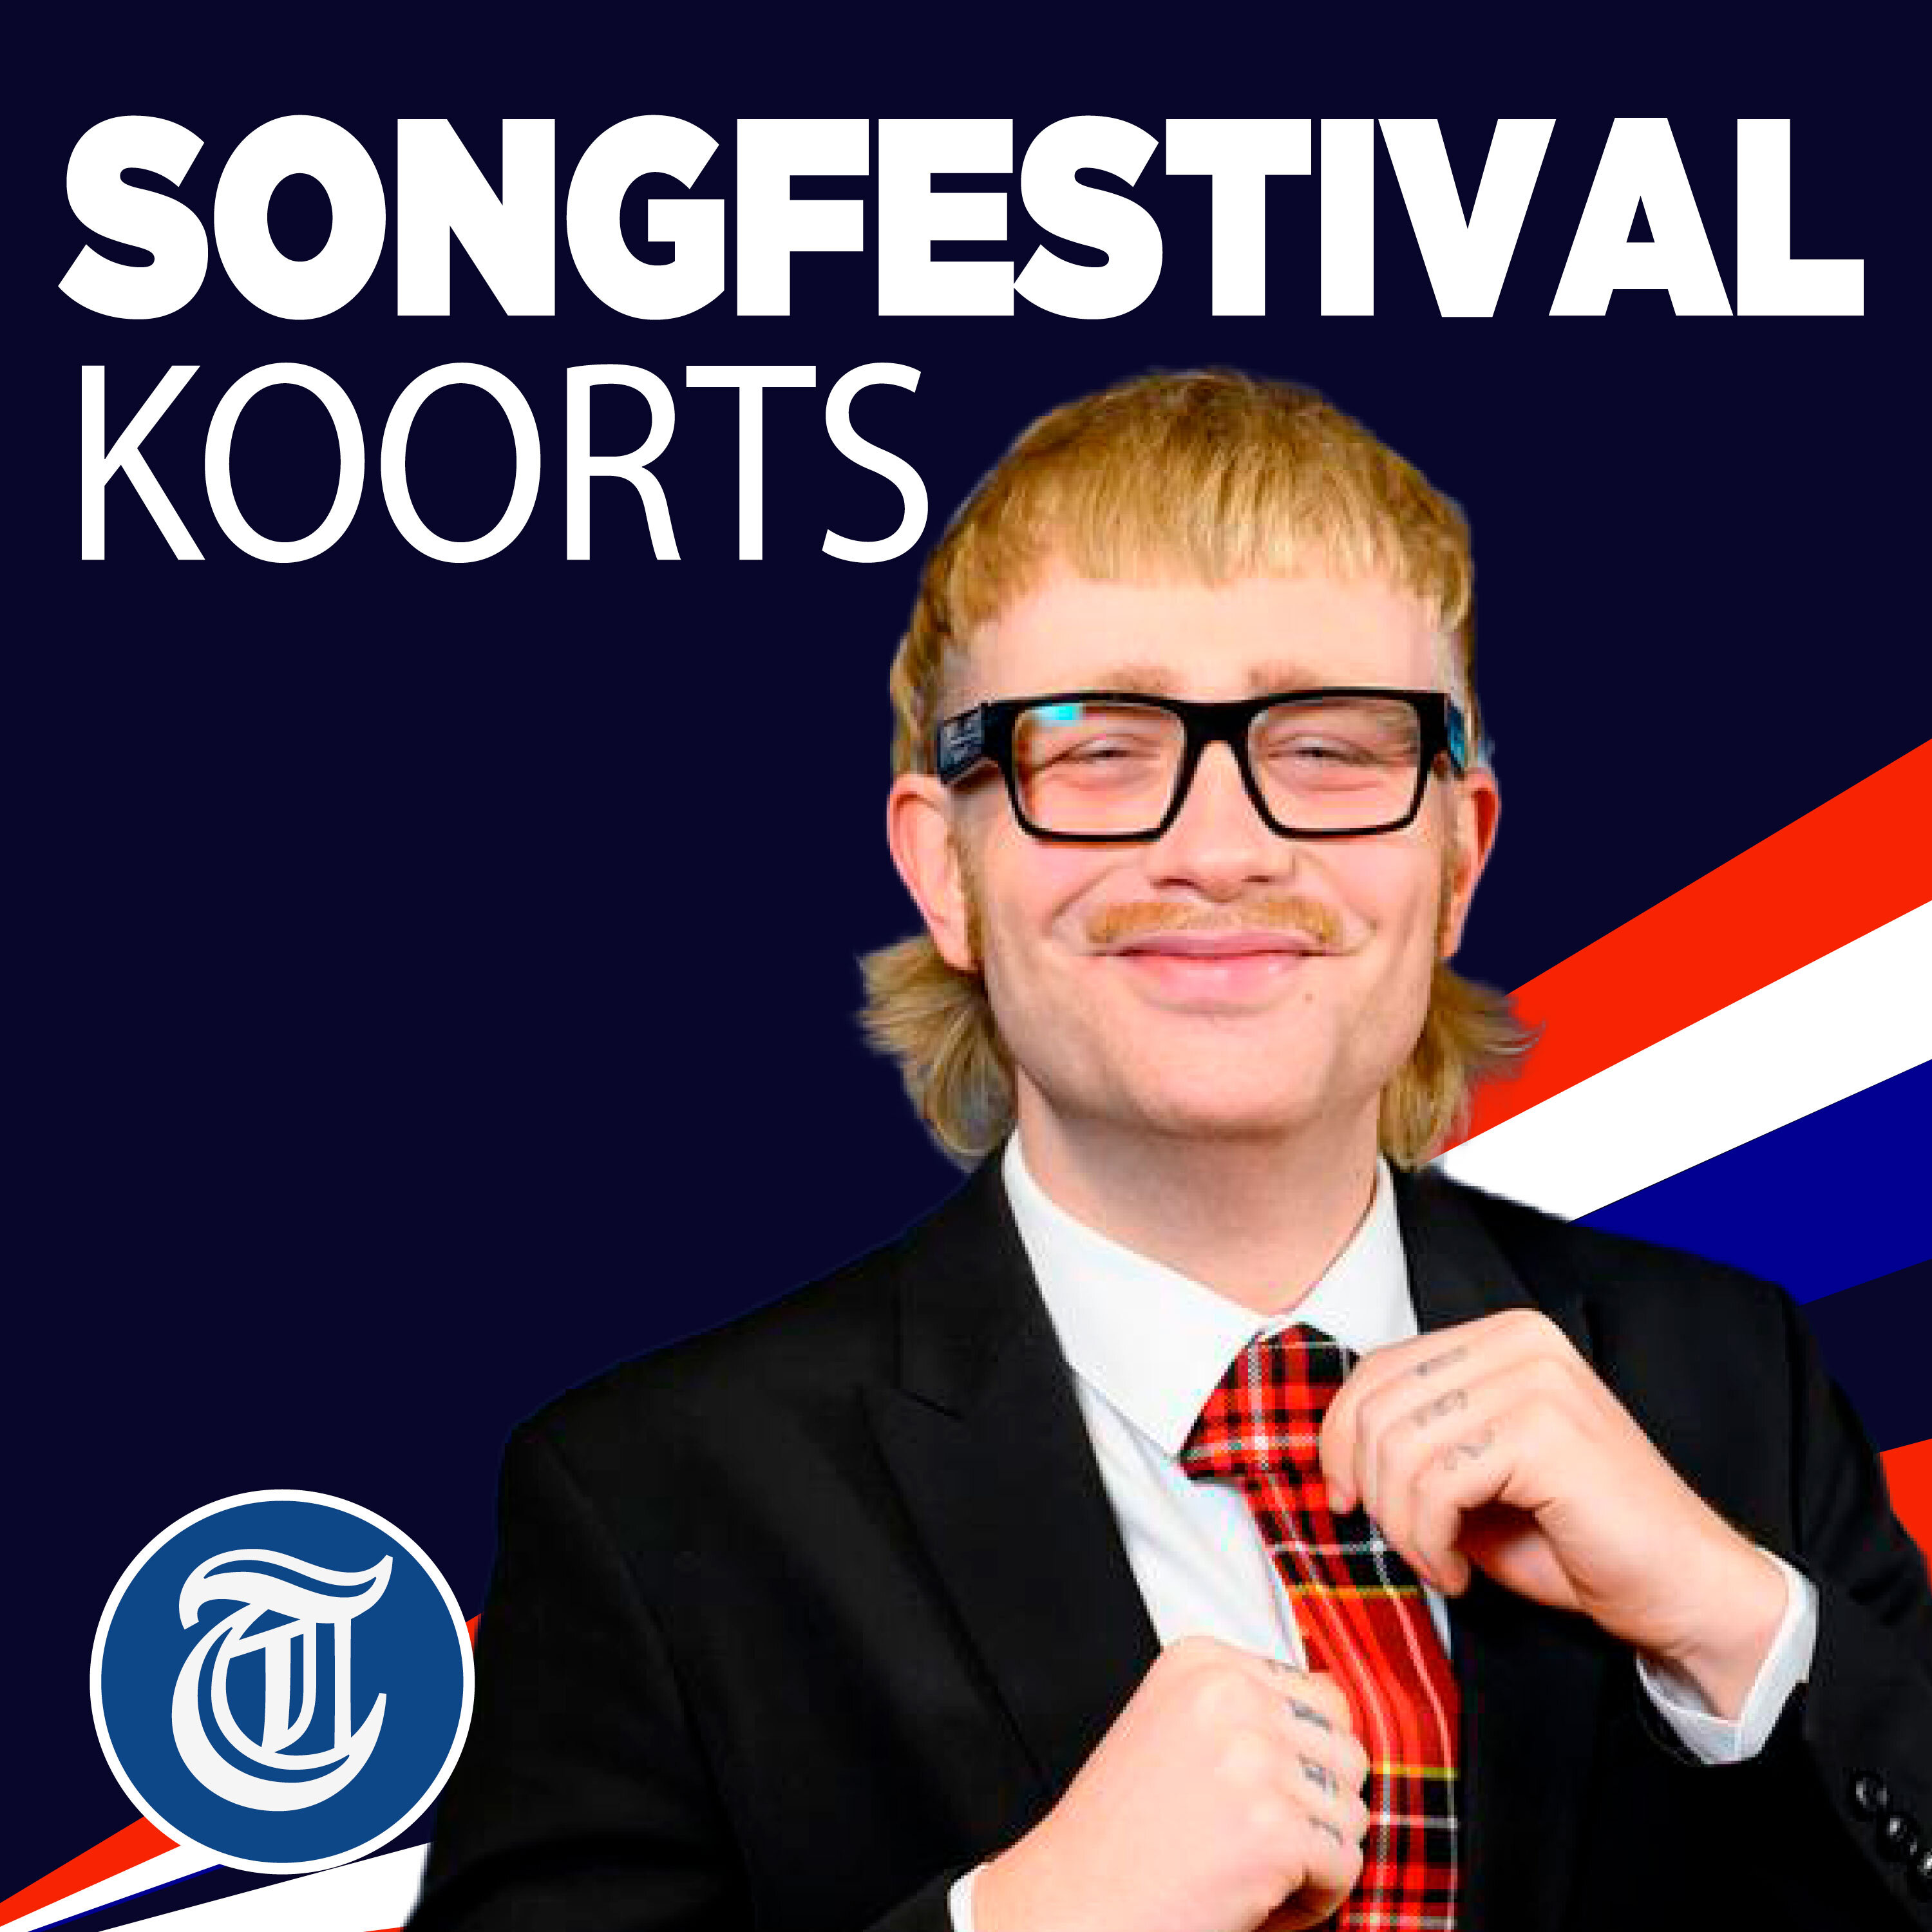 Songfestivalkoorts logo